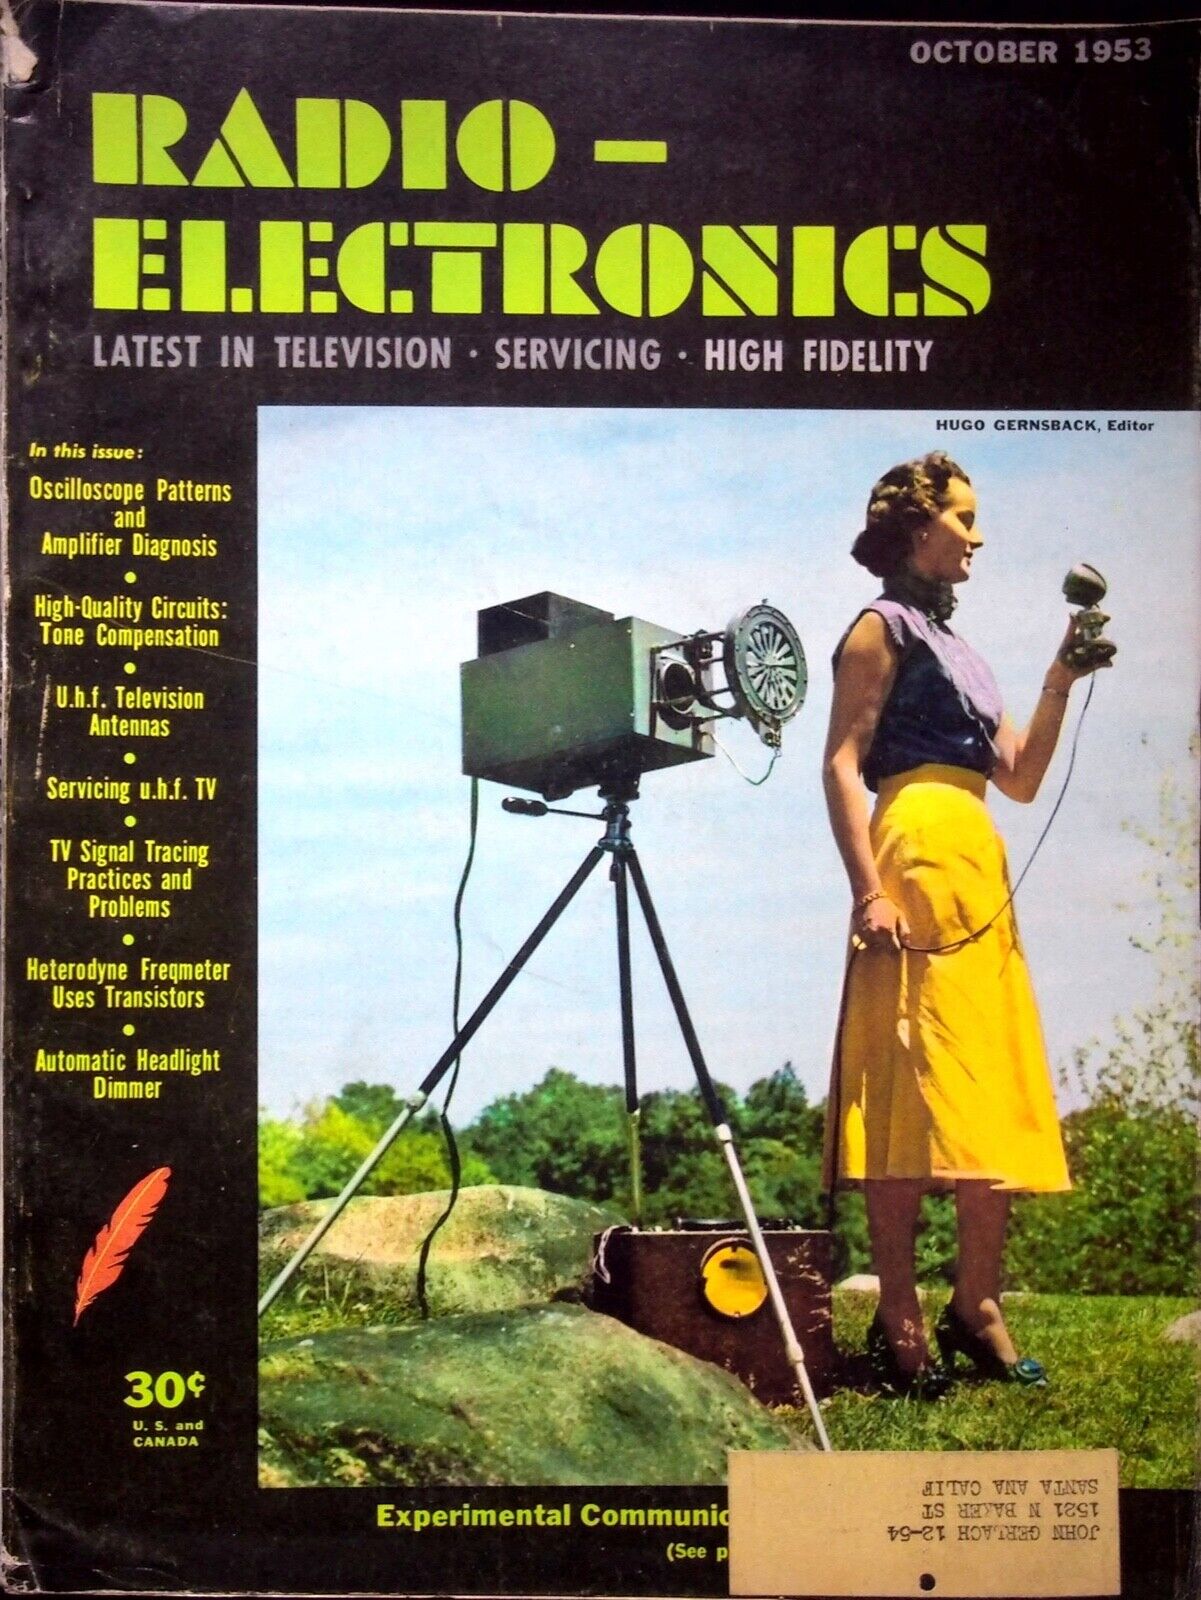 AMPLIFIER DIAGNOSIS - RADIO ELECTRONICS  MAGAZINE, OCTOBER 1953